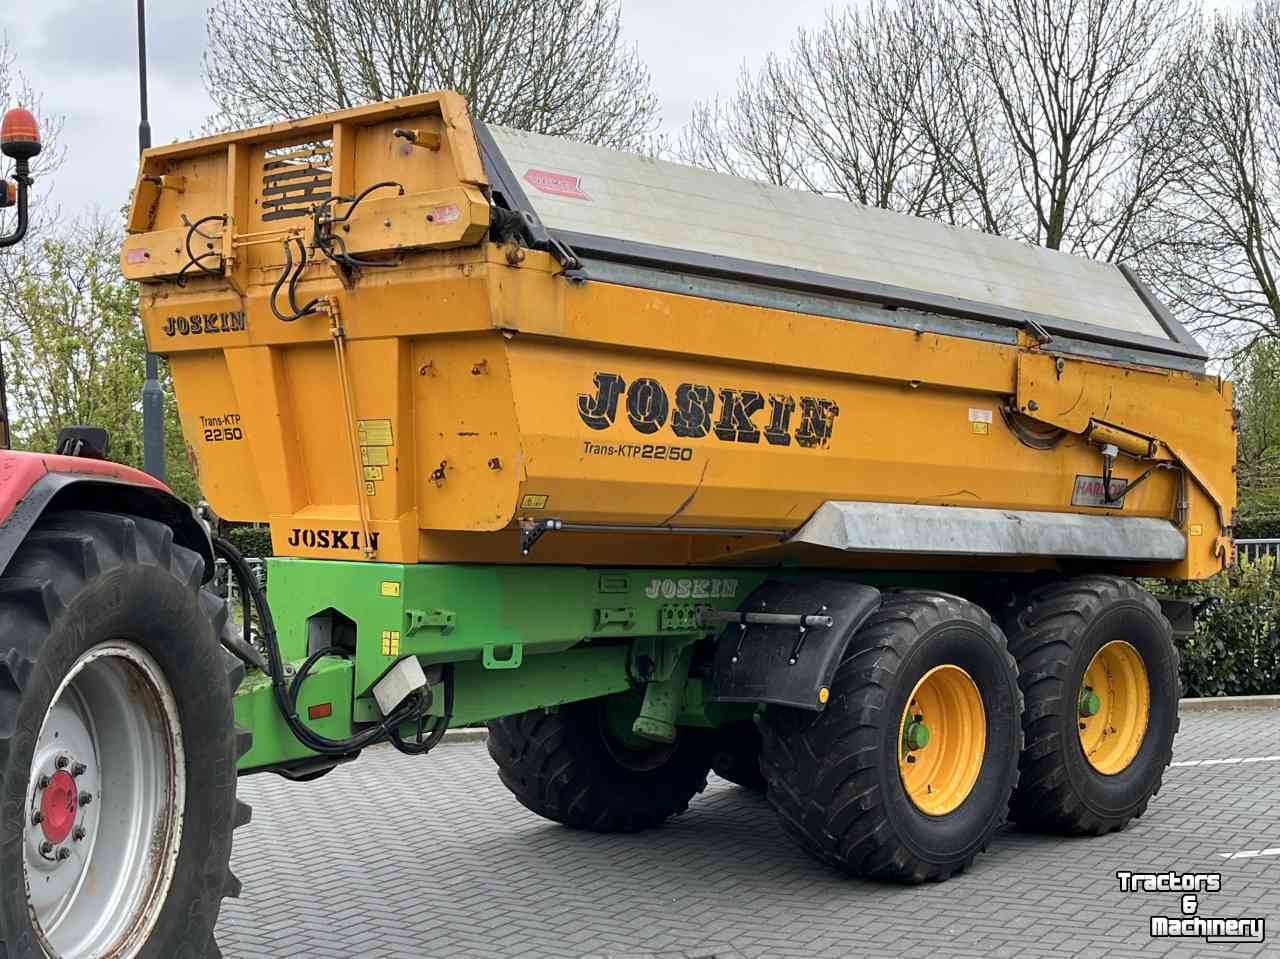 Gronddumper / Zandkipper Joskin Trans-KTP 22/50 grondkipwagen-Kipper-Dumper